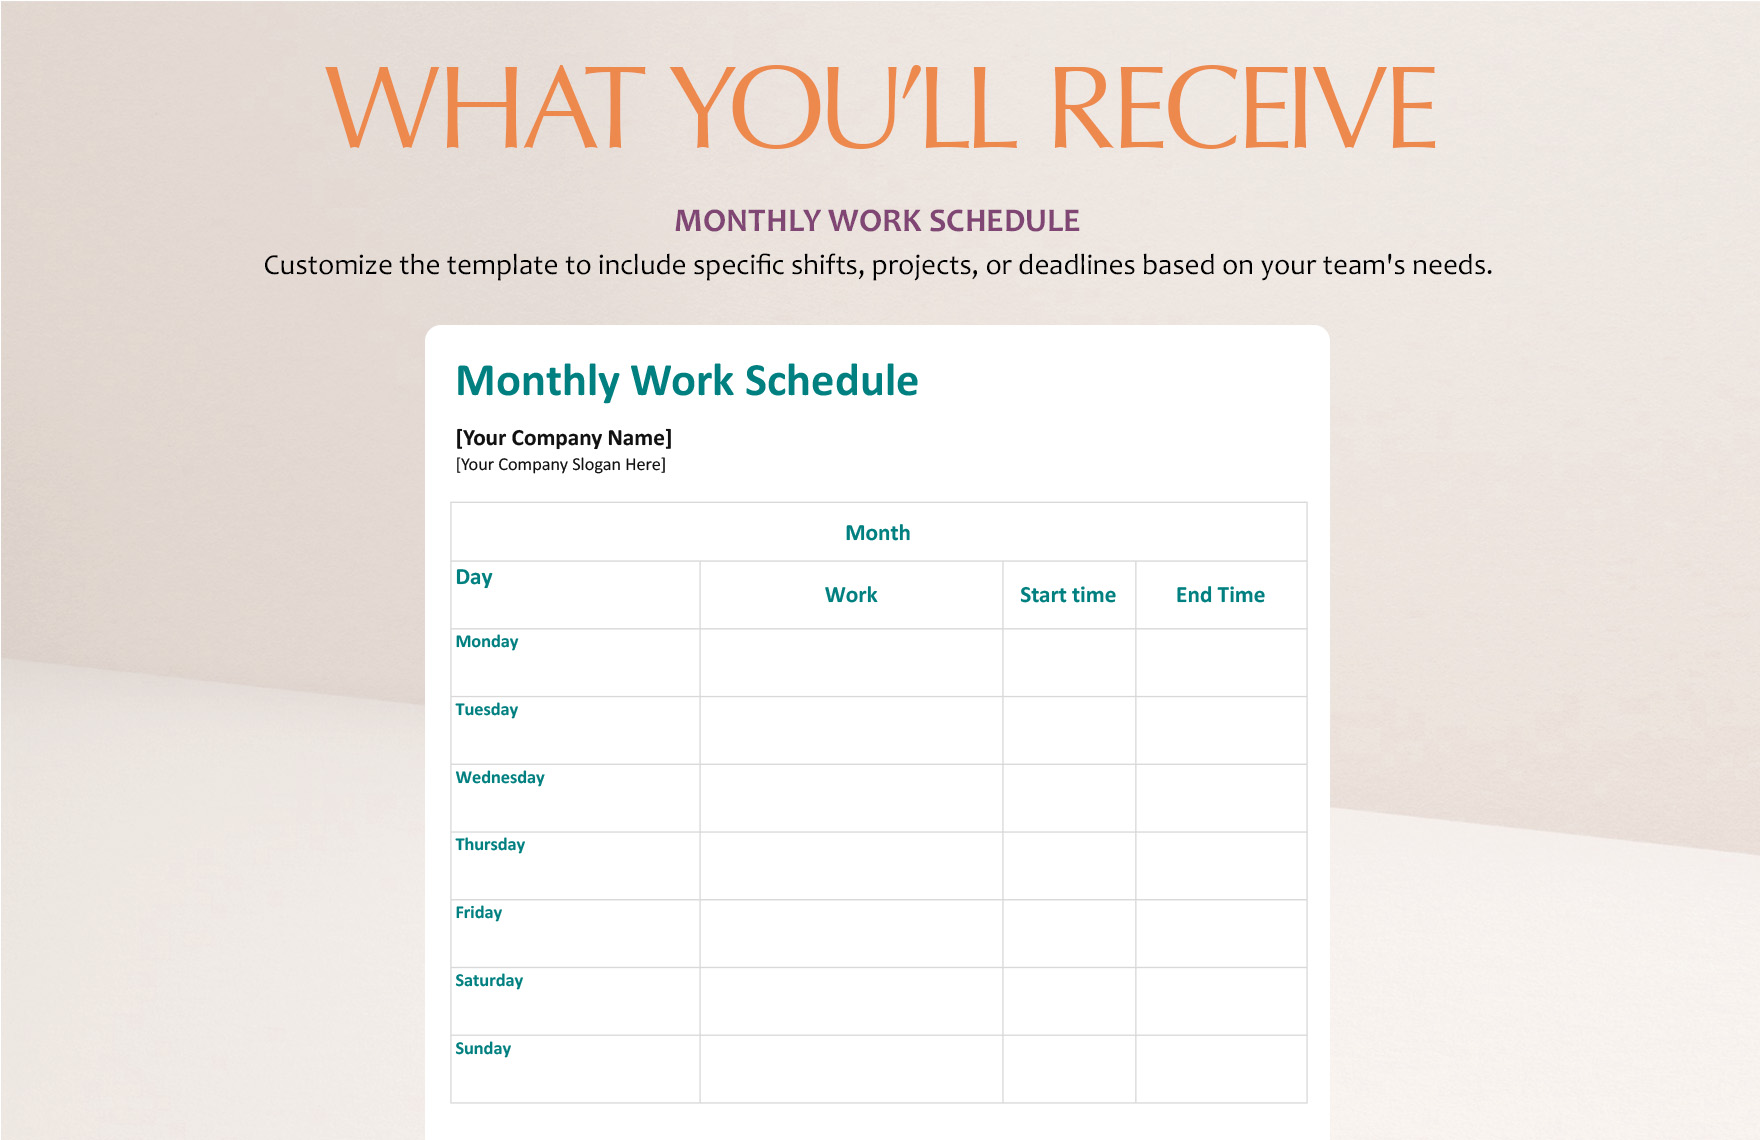 Monthly Work Schedule Template